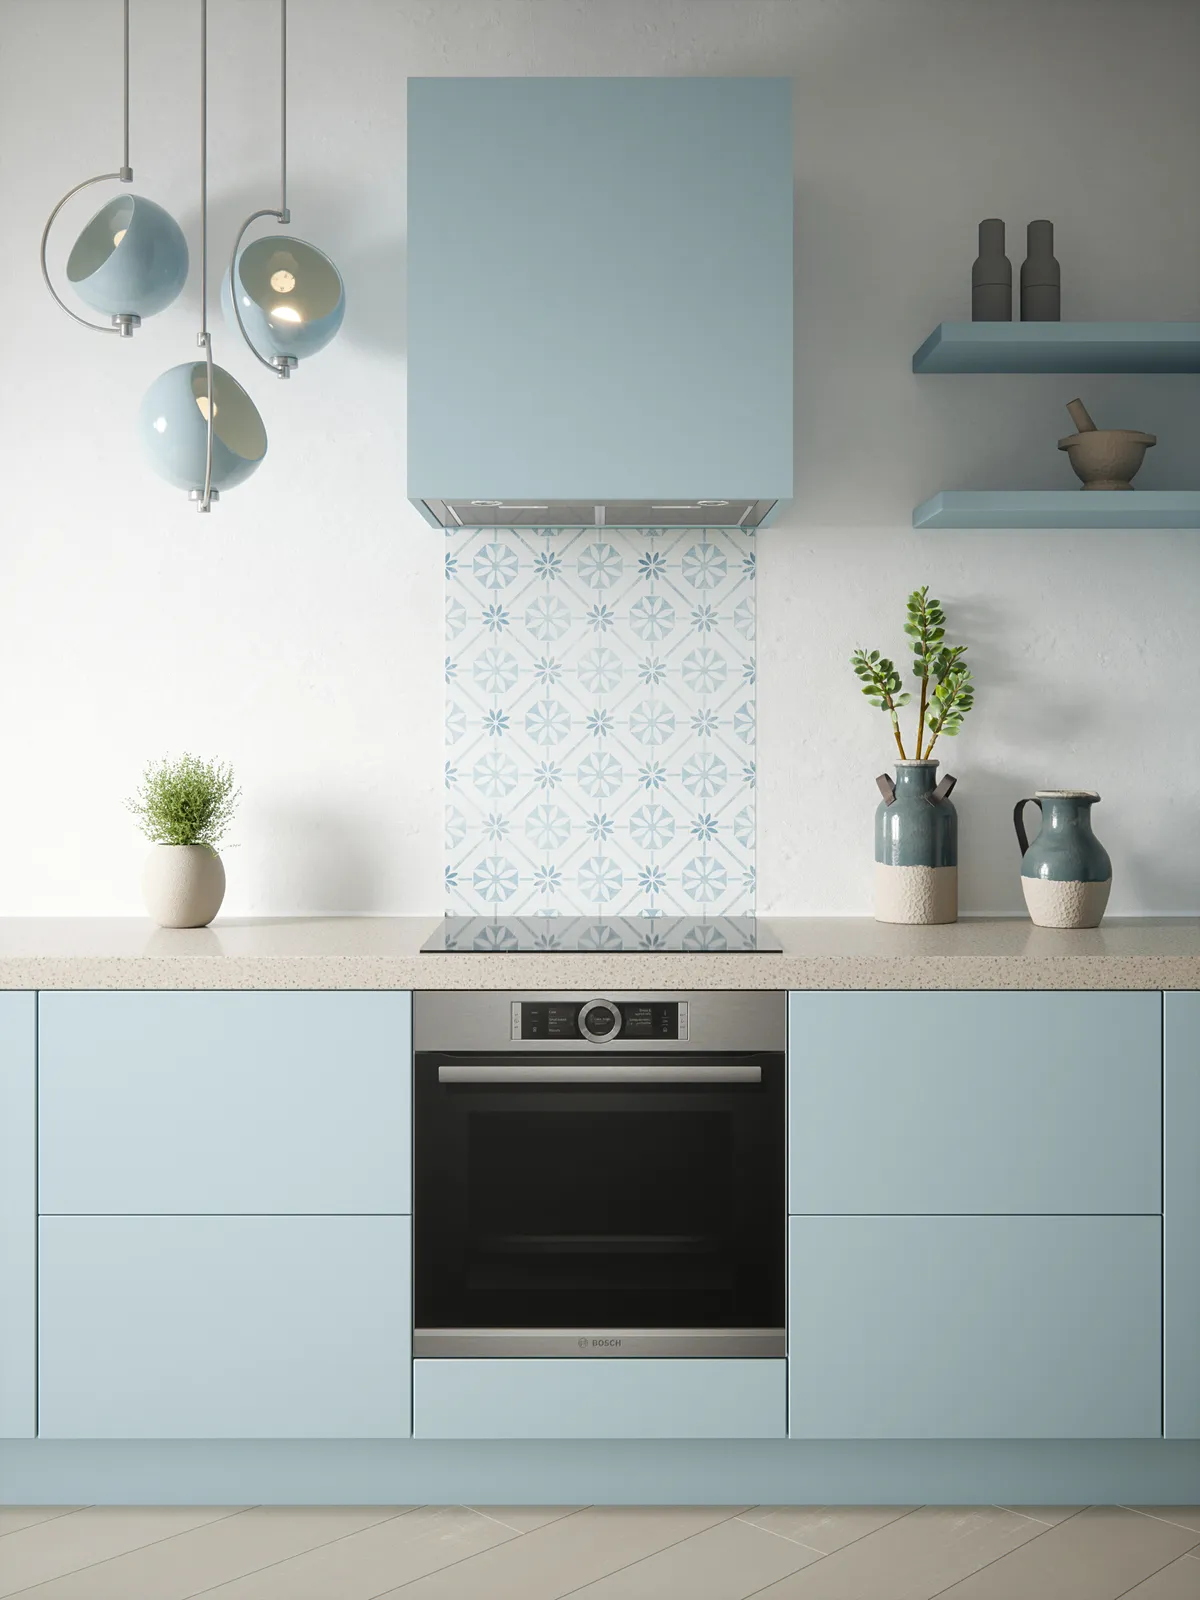 kitchen splashback ideas - light blue tiles